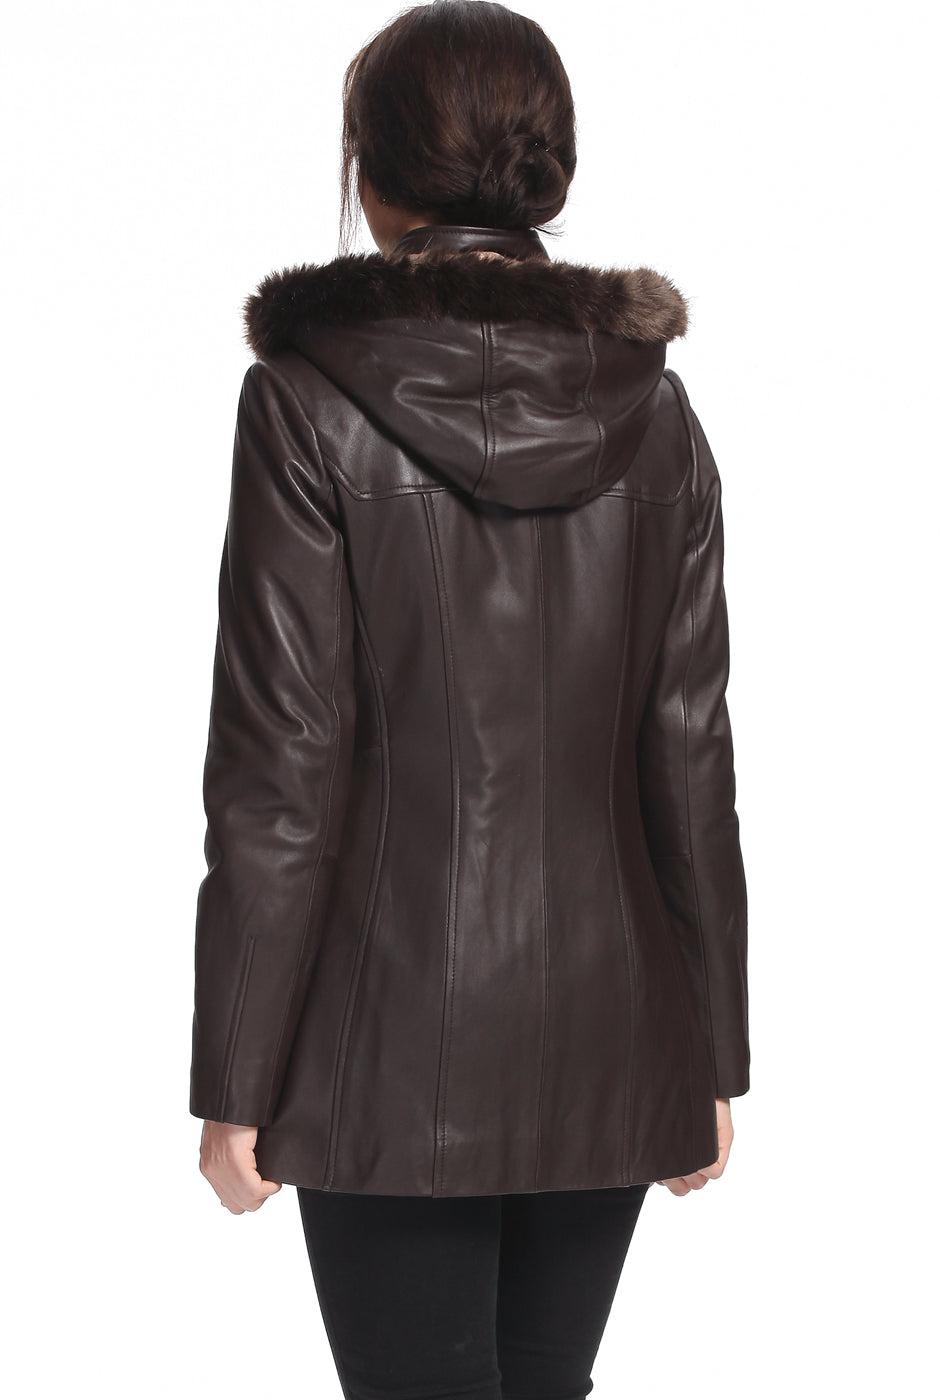 BGSD Women Amanda Hooded Lambskin Leather Toggle Coat